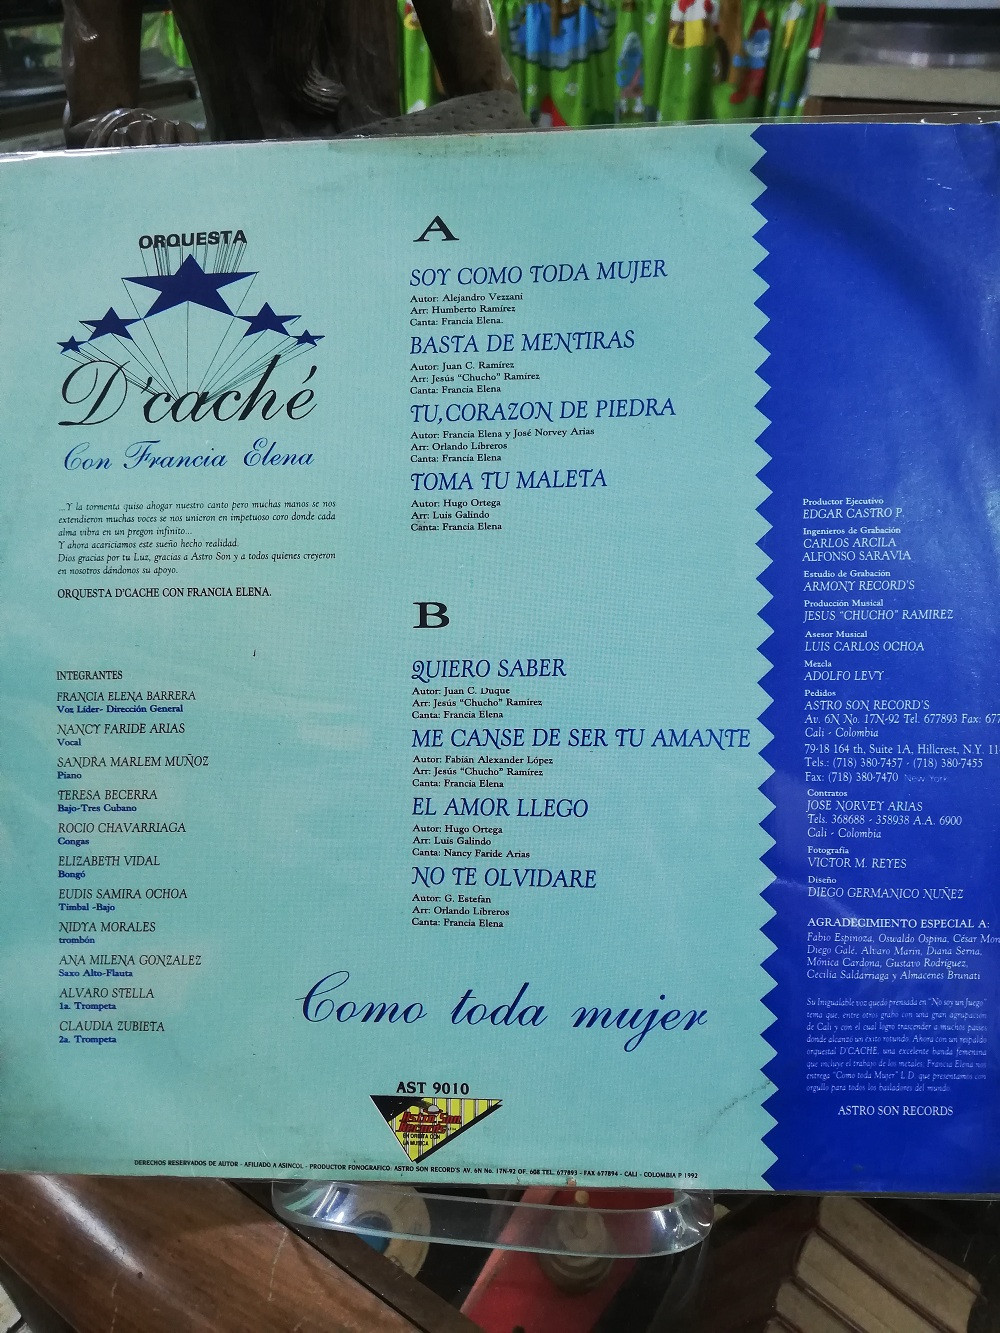 Imagen LP ORQUESTA D´ CACHE CON FRANCIA ELENA - COMO TODA MUJER 2